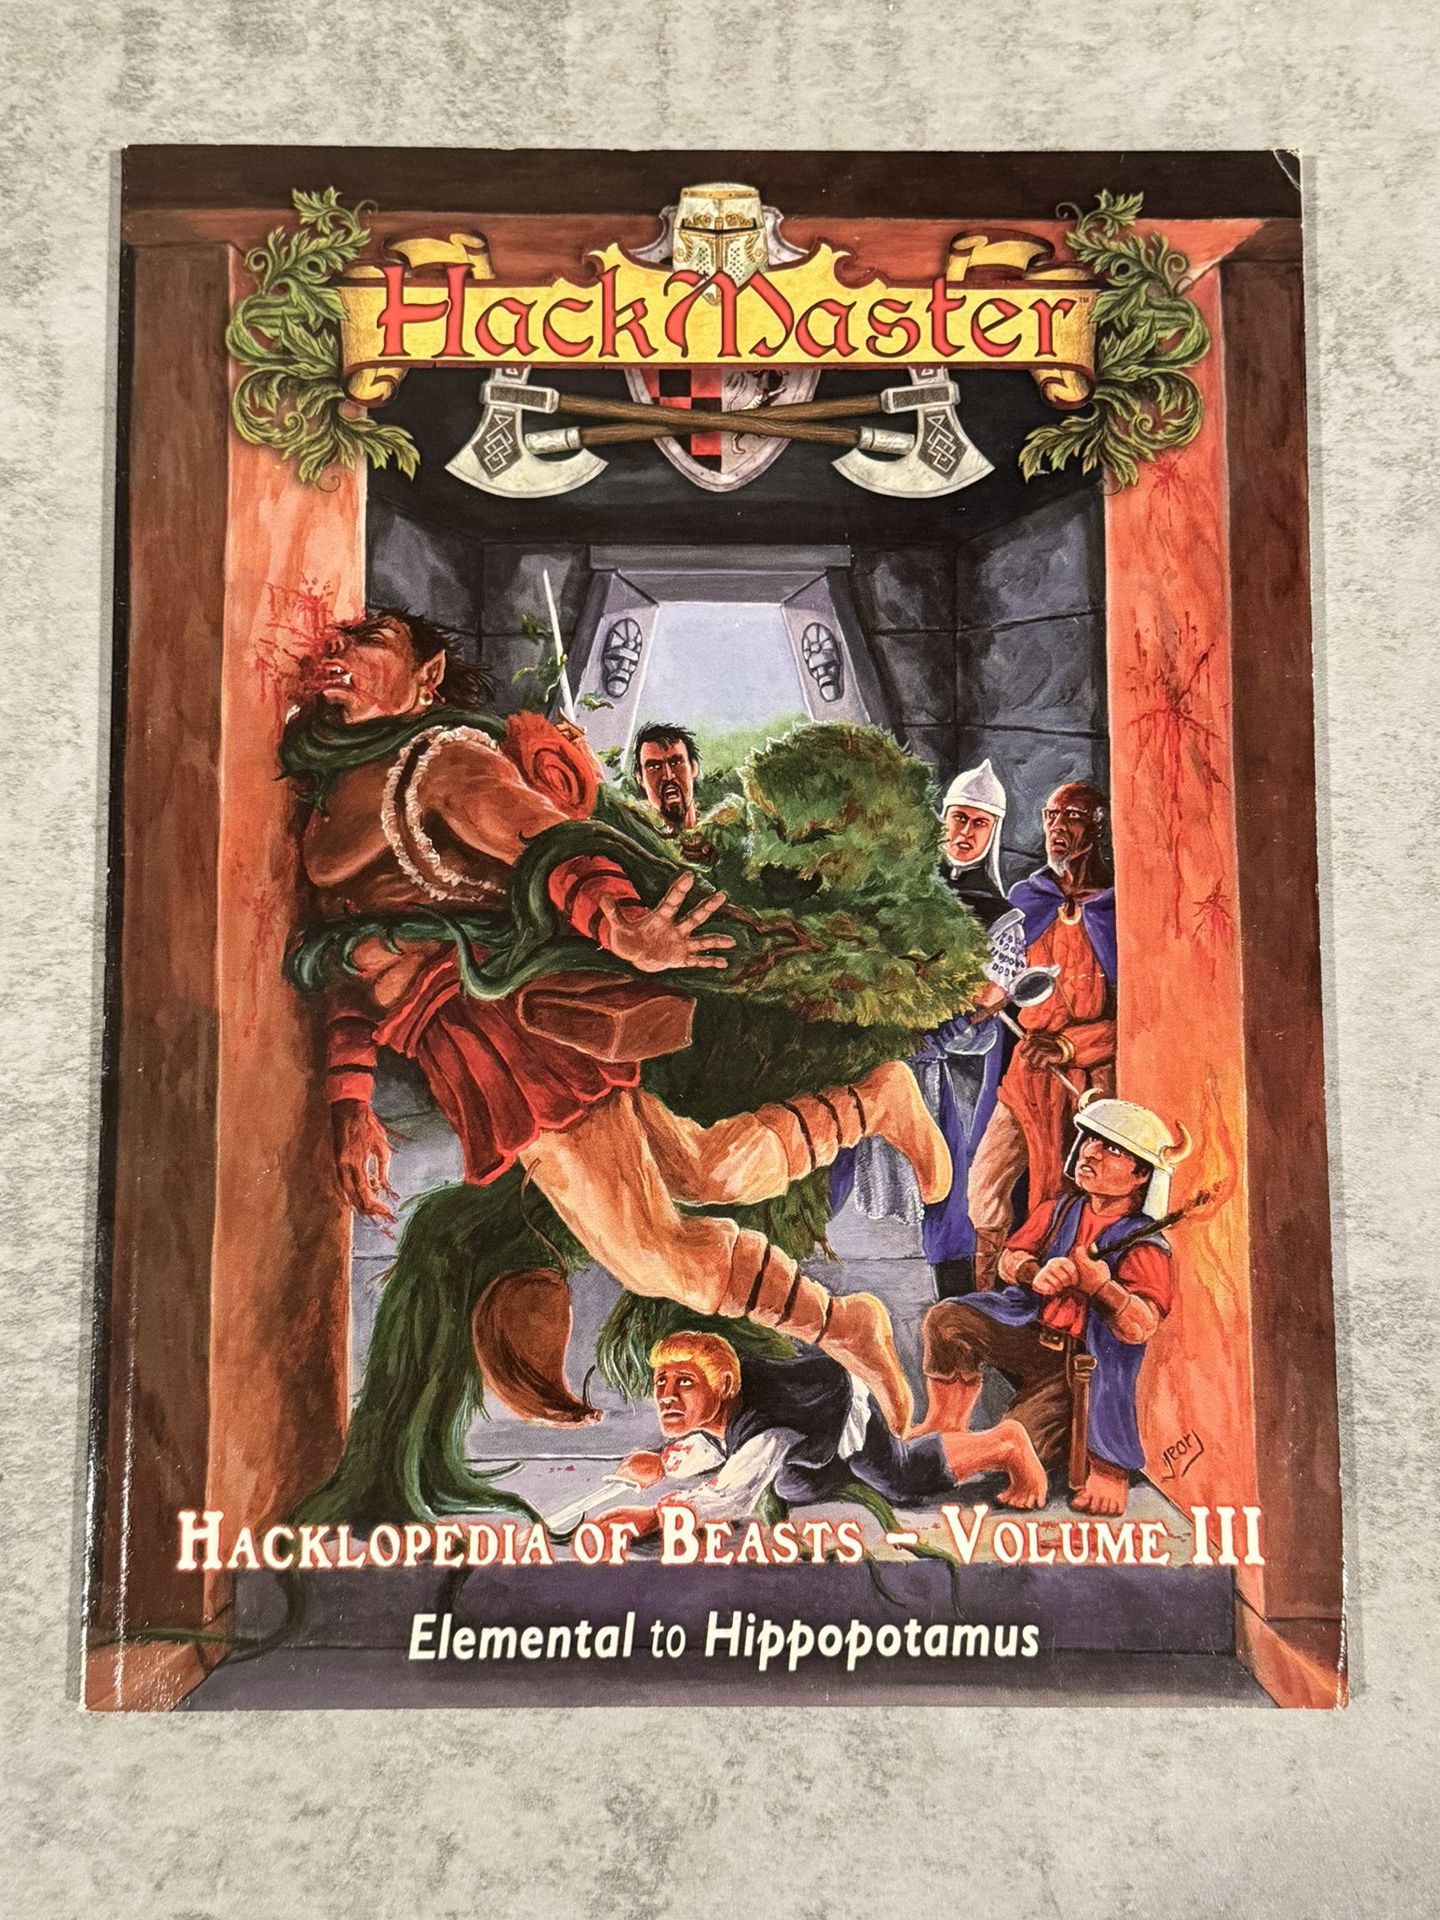 HackMaster 4th Edition Hacklopedia of Beasts Vol. 3 III (VG+)